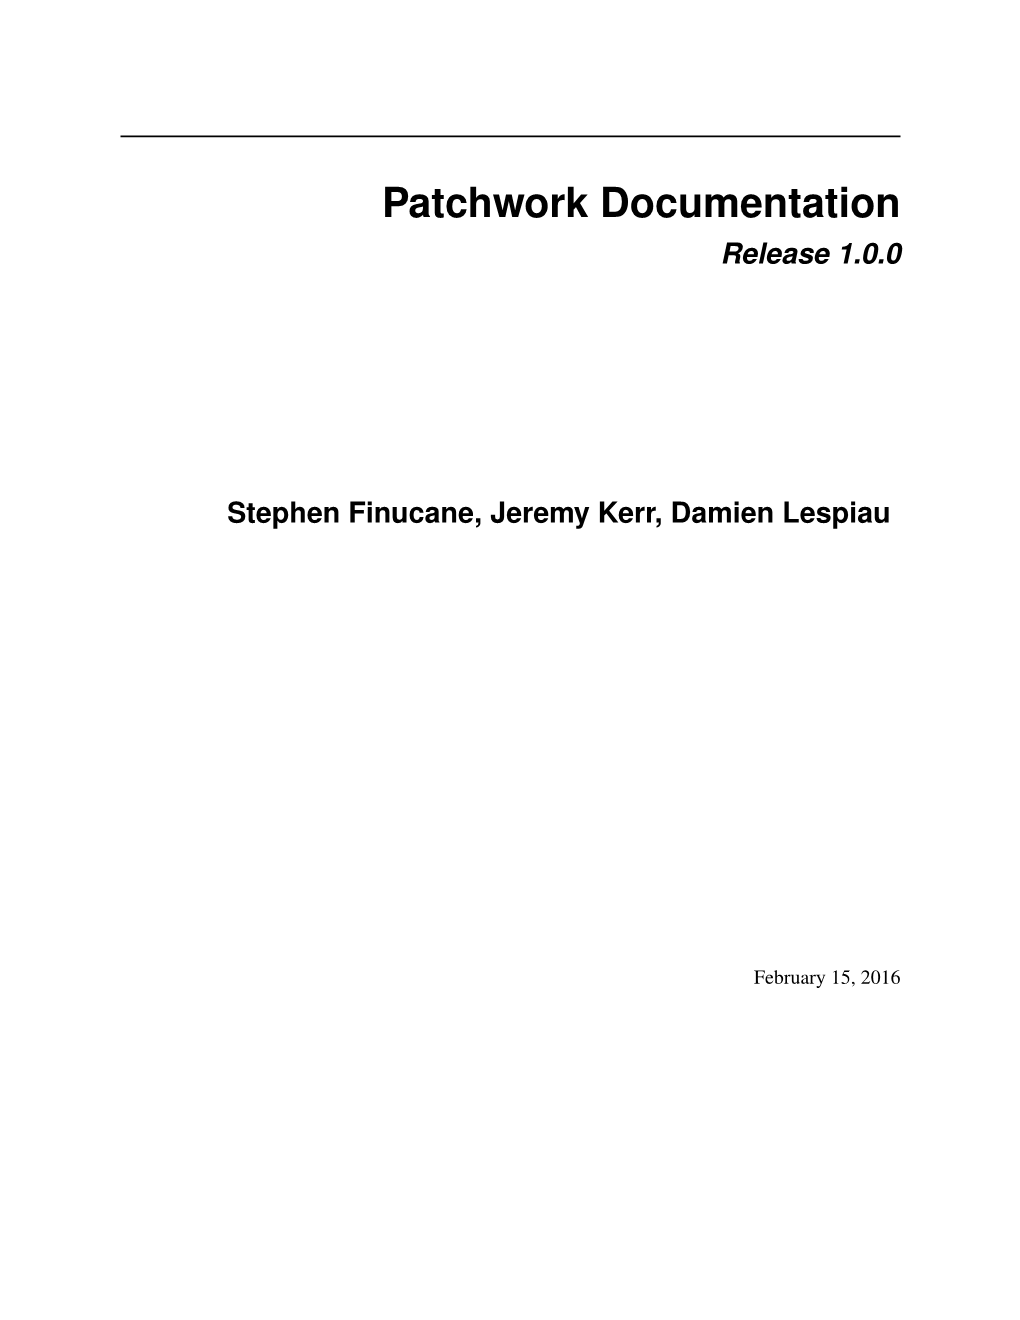 Patchwork Documentation Release 1.0.0